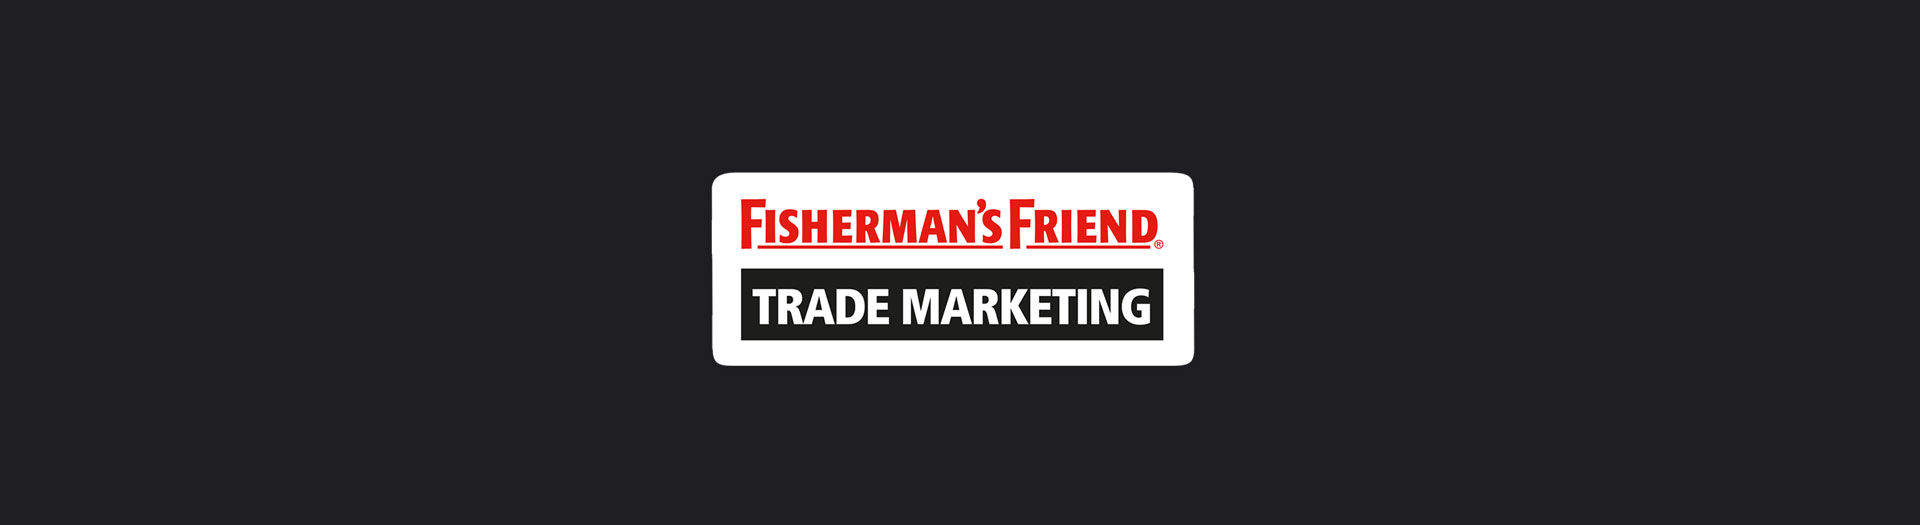 Trademarketing Fisherman's Friend